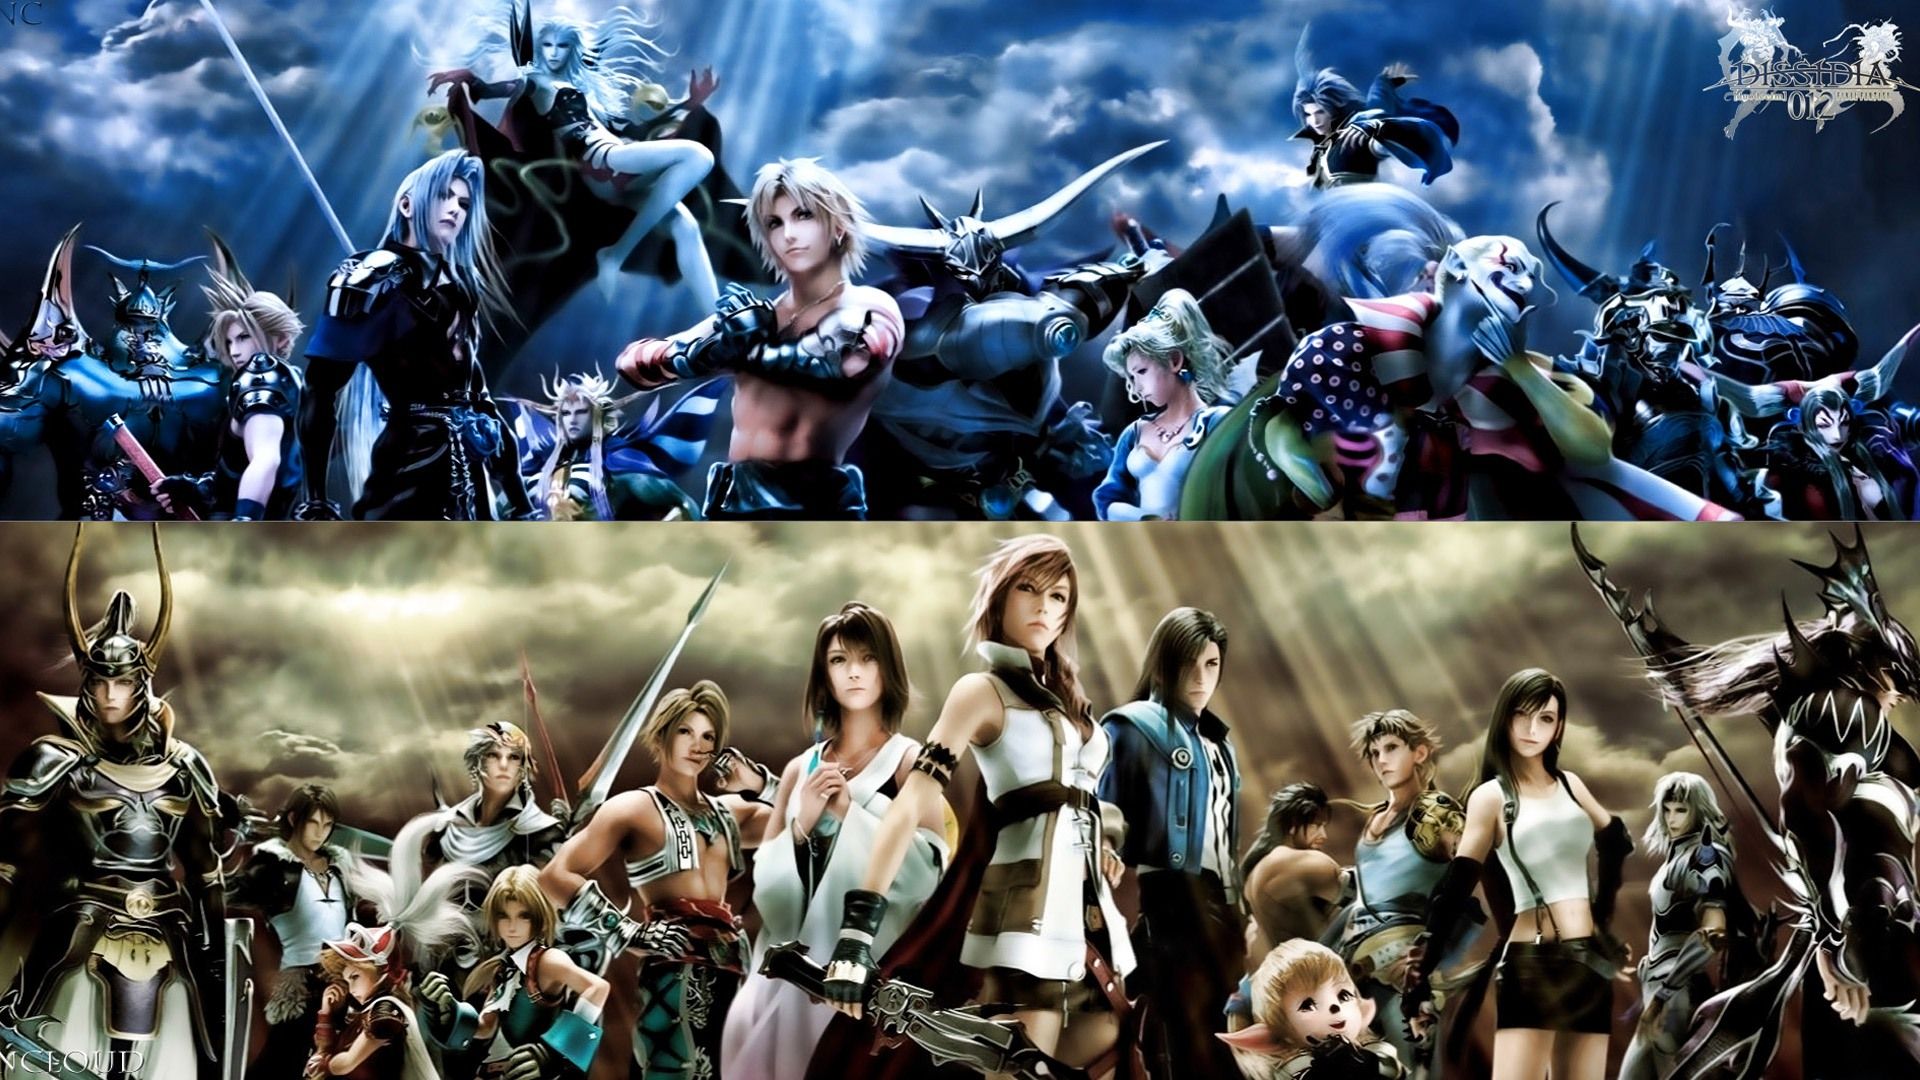 100% Quality HD Final Fantasy Image, Wallpaper